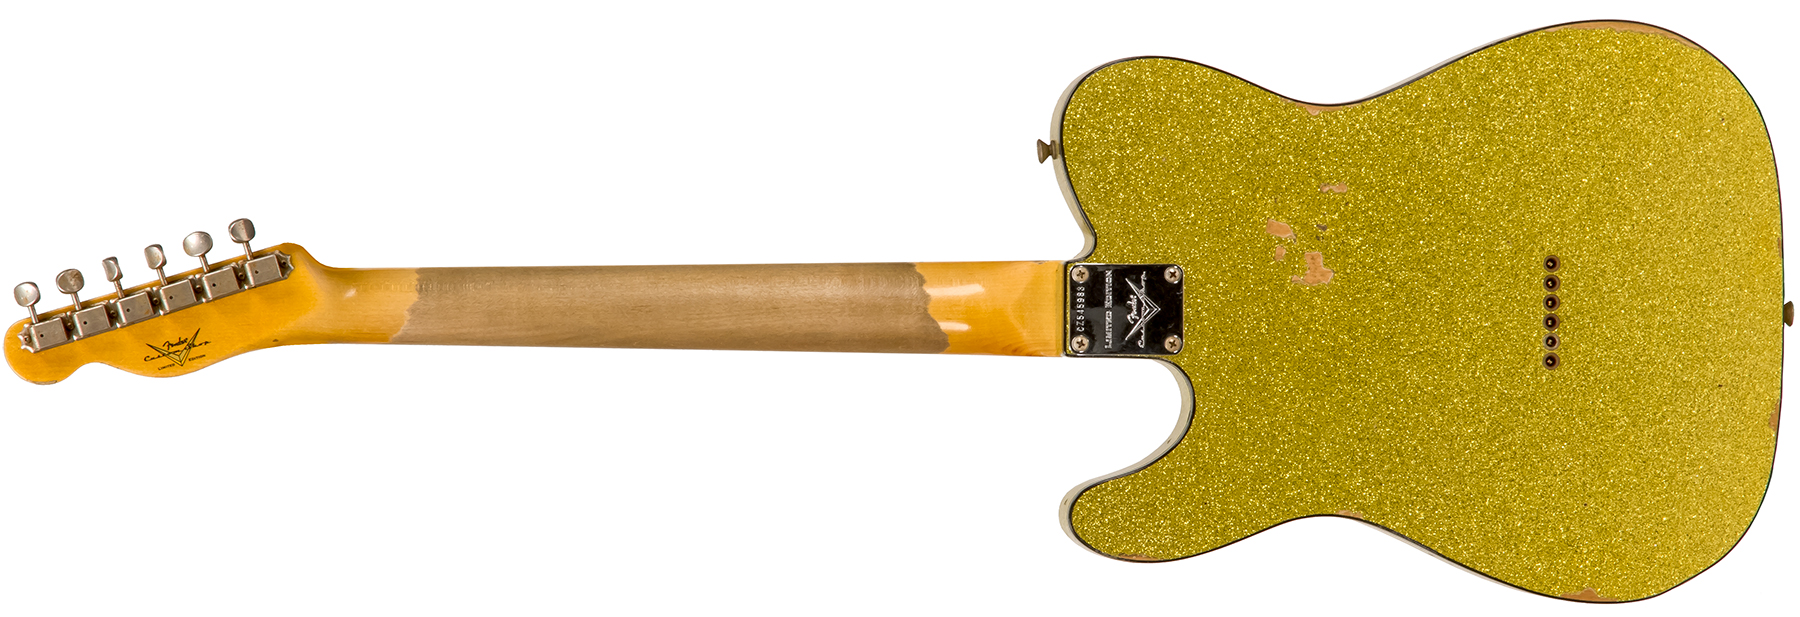 Fender Custom Shop Tele Custom 1963 2020 Ltd Rw #cz545983 - Relic Chartreuse Sparkle - Guitarra eléctrica con forma de tel - Variation 1